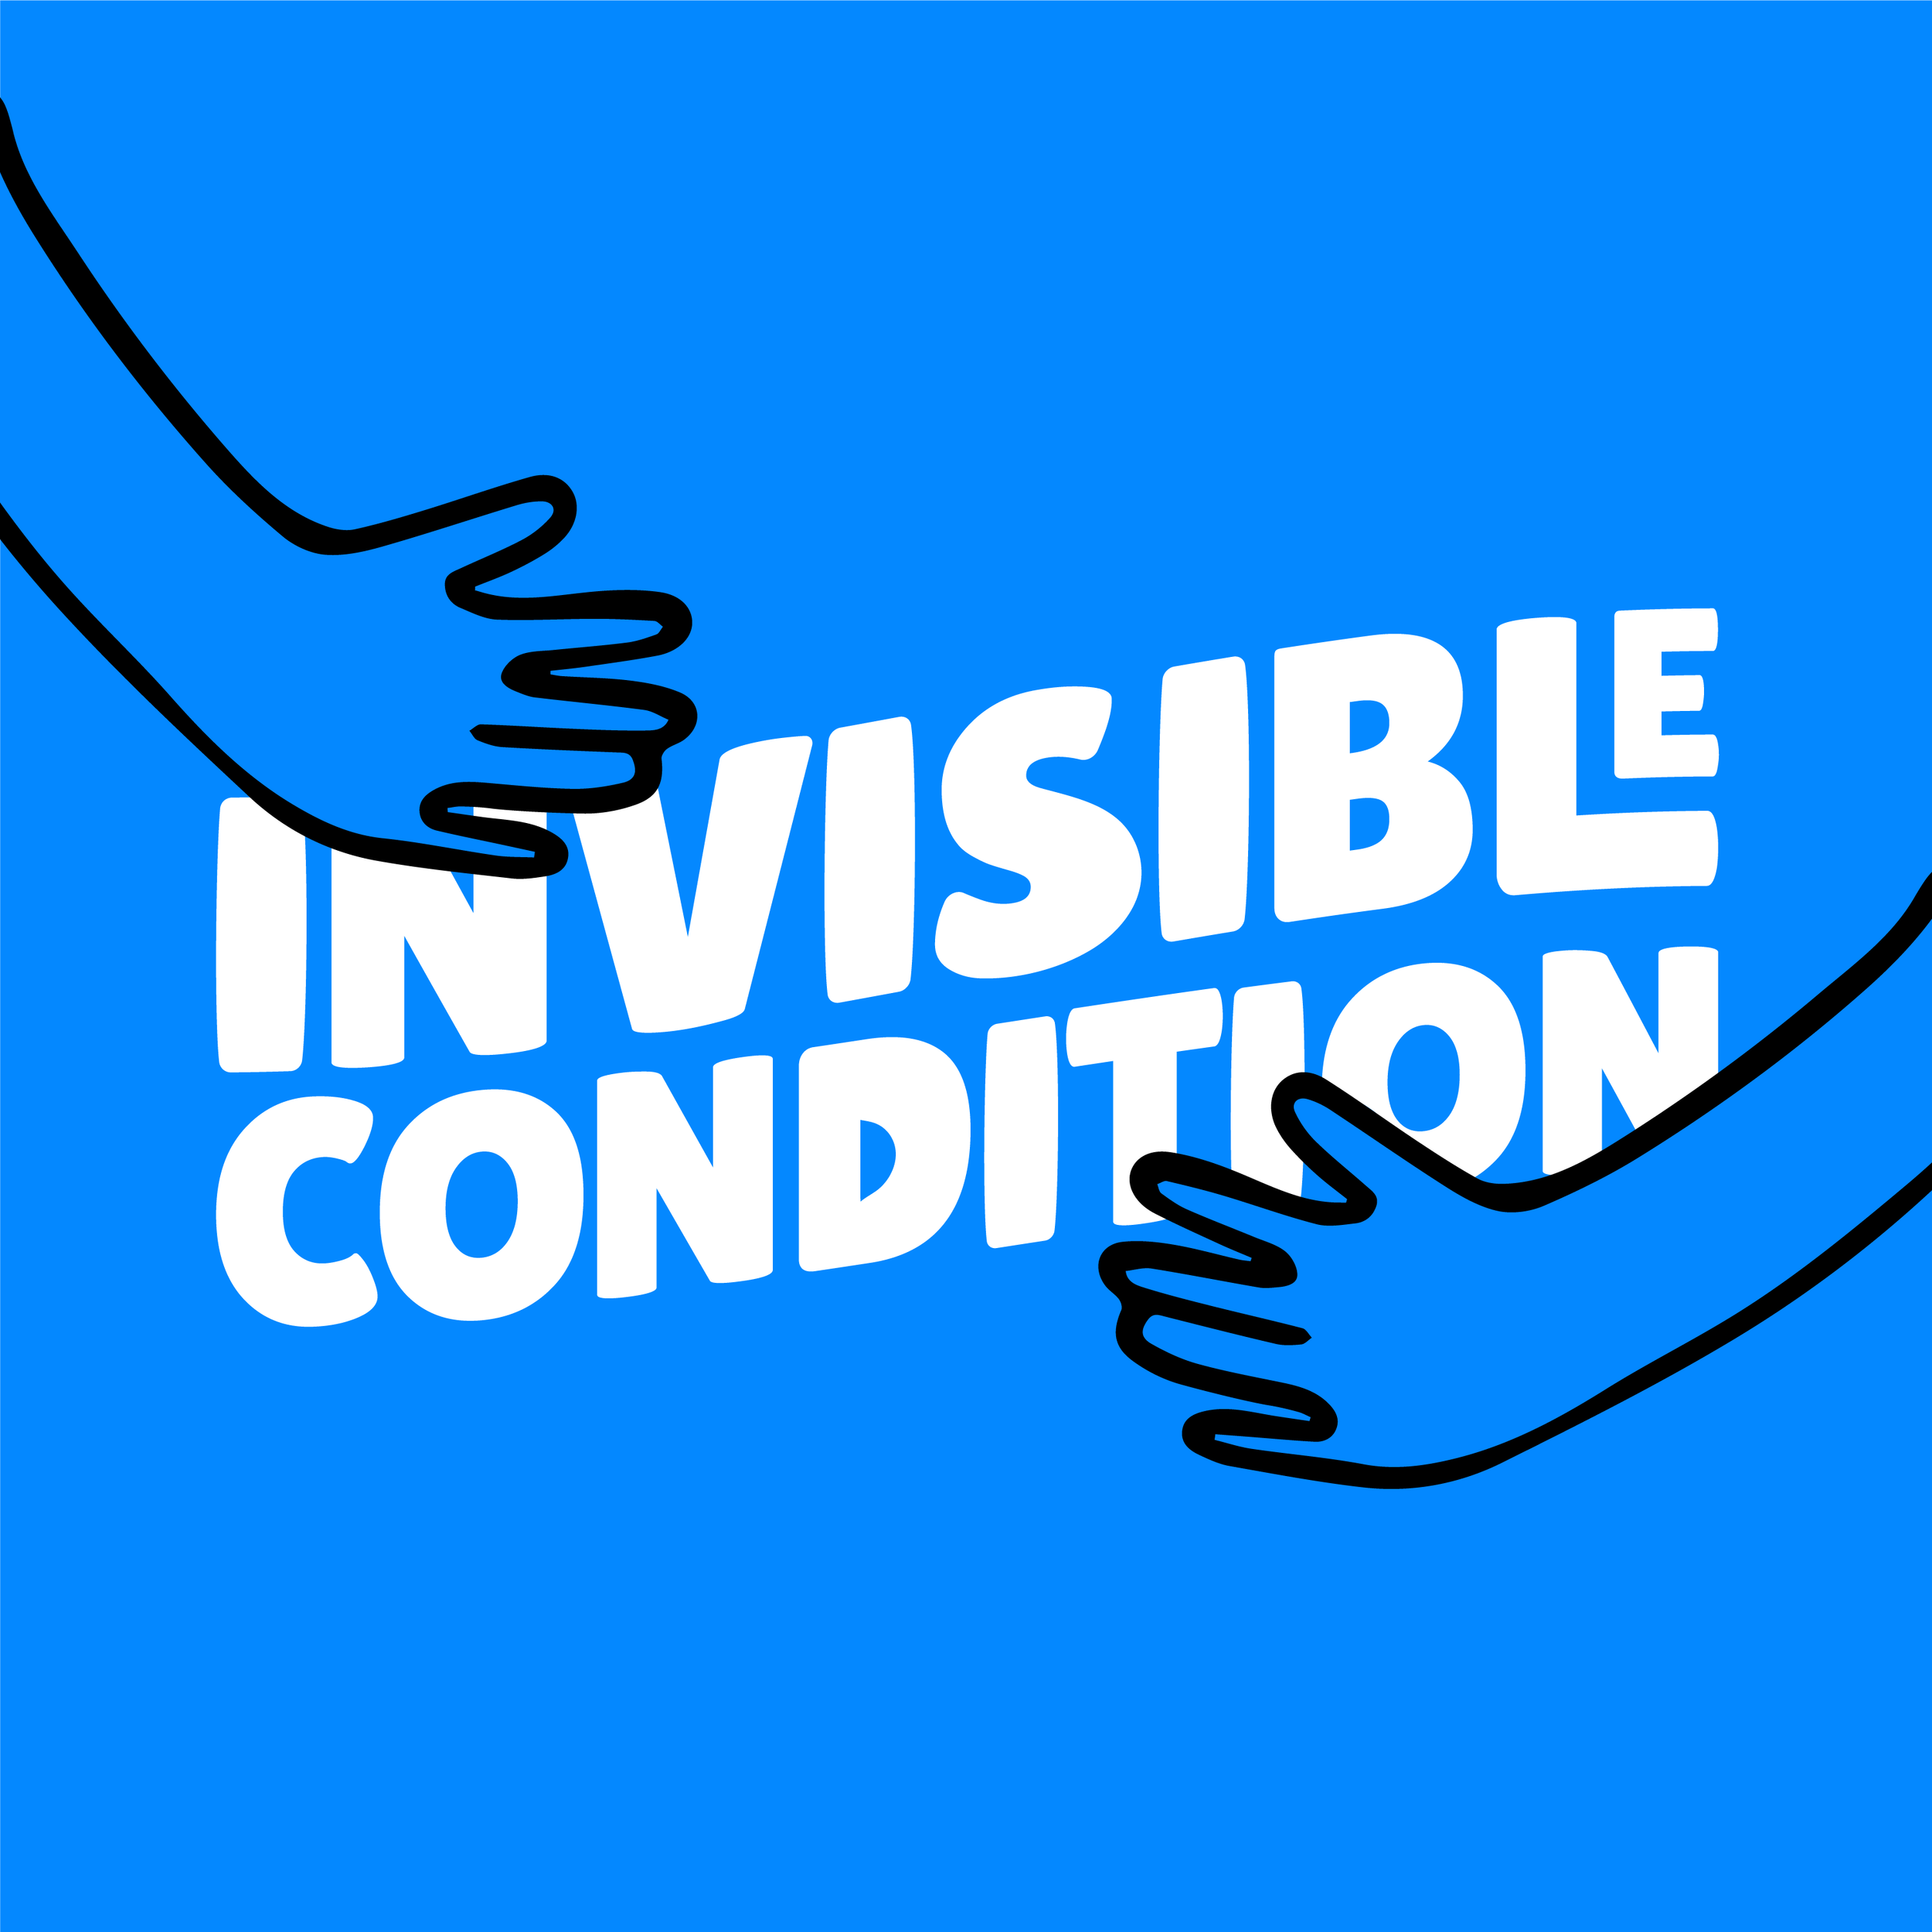 Invisible Condition Articles